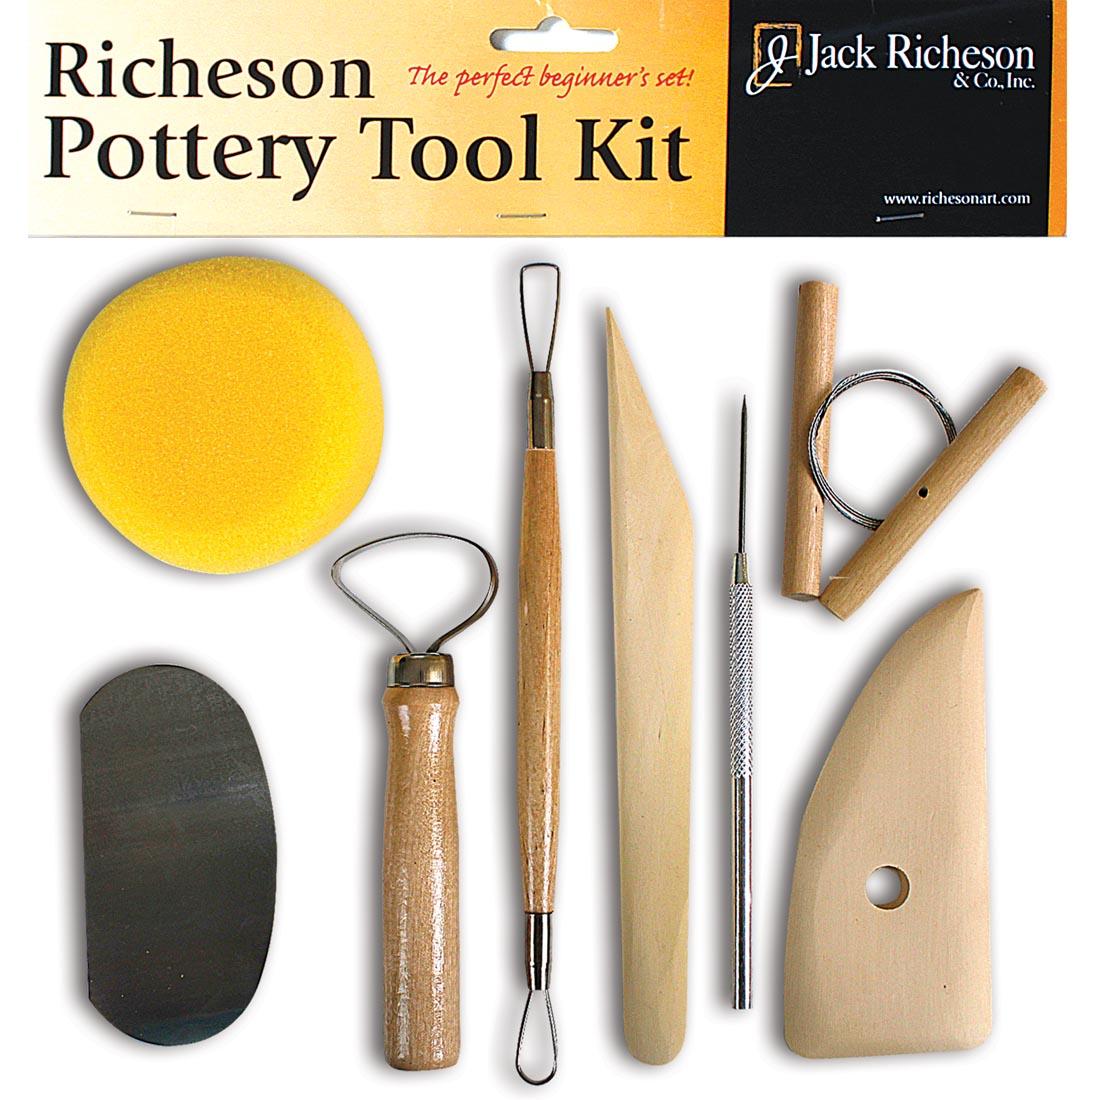 Richeson Pottery Tool Kit